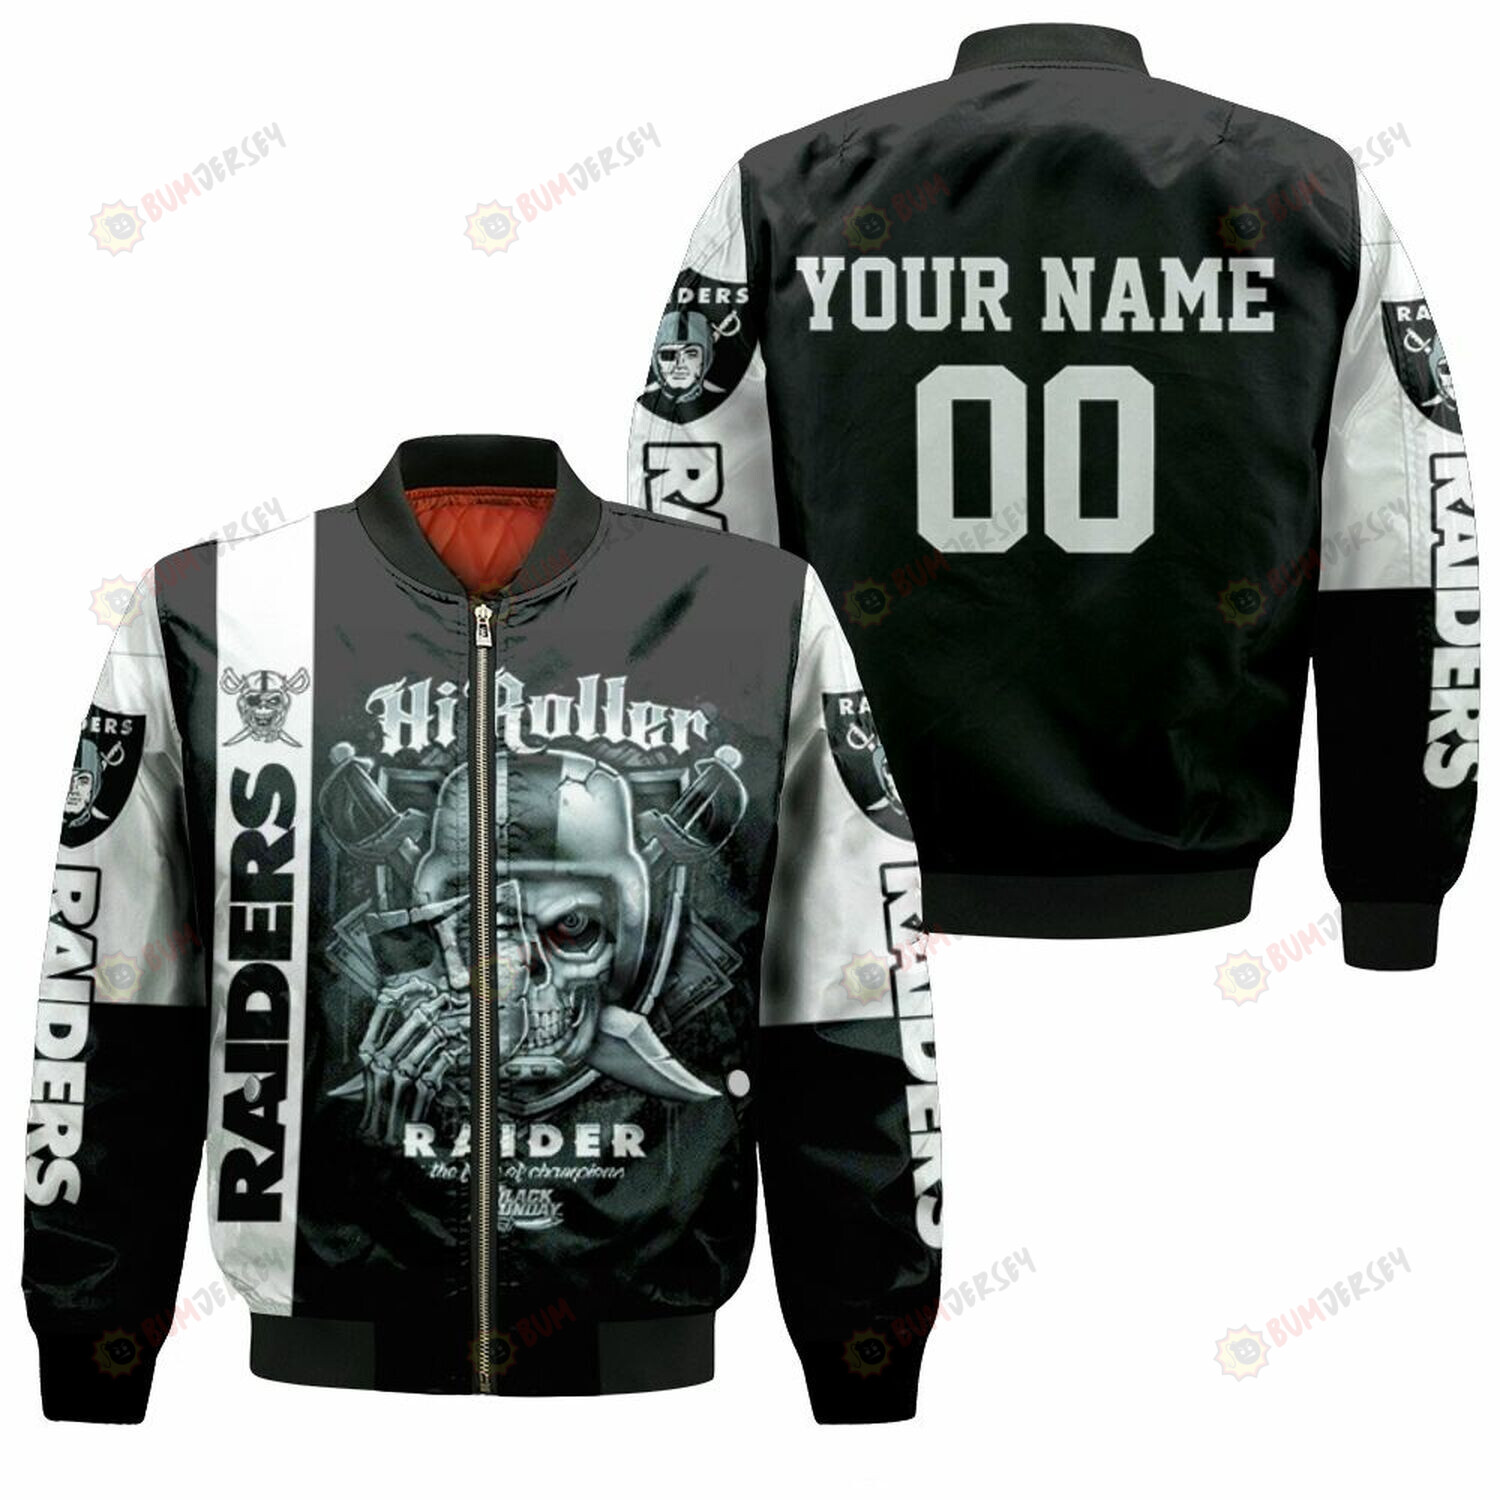 Oakland Raiders Hi Roller Skull Customized Pattern Bomber Jacket